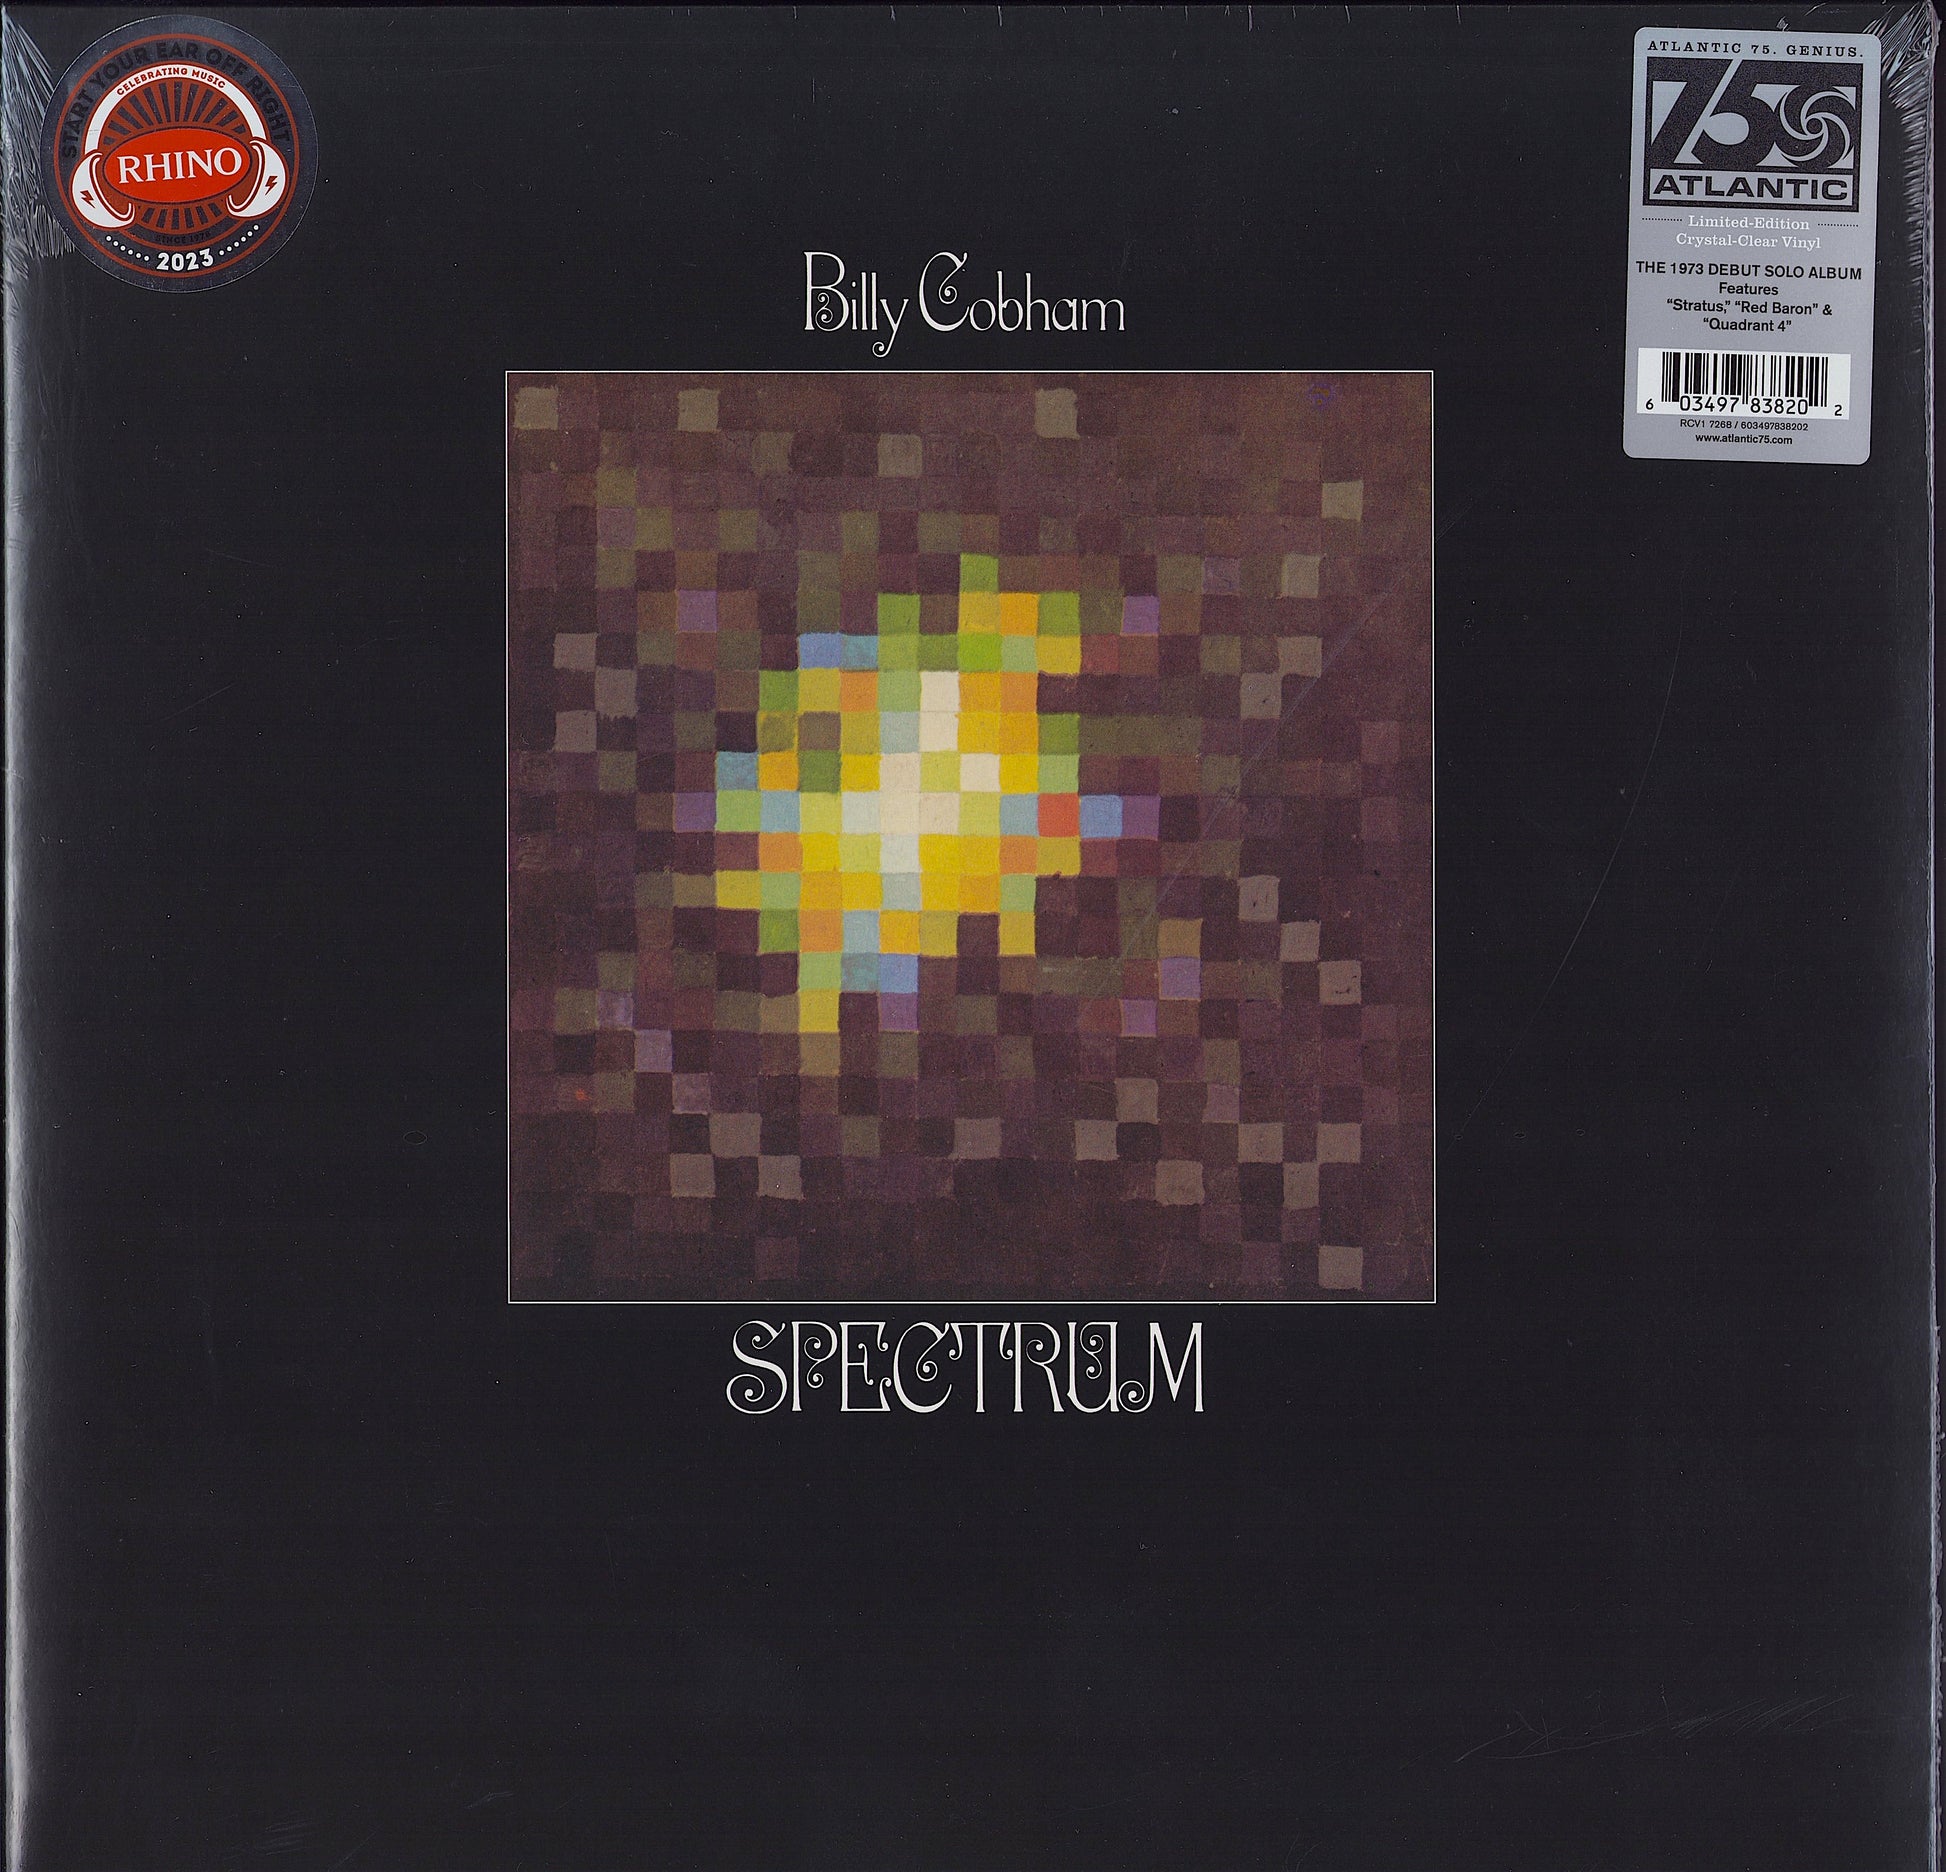 Billy Cobham - Spectrum (Clear Vinyl LP) Limited Edition